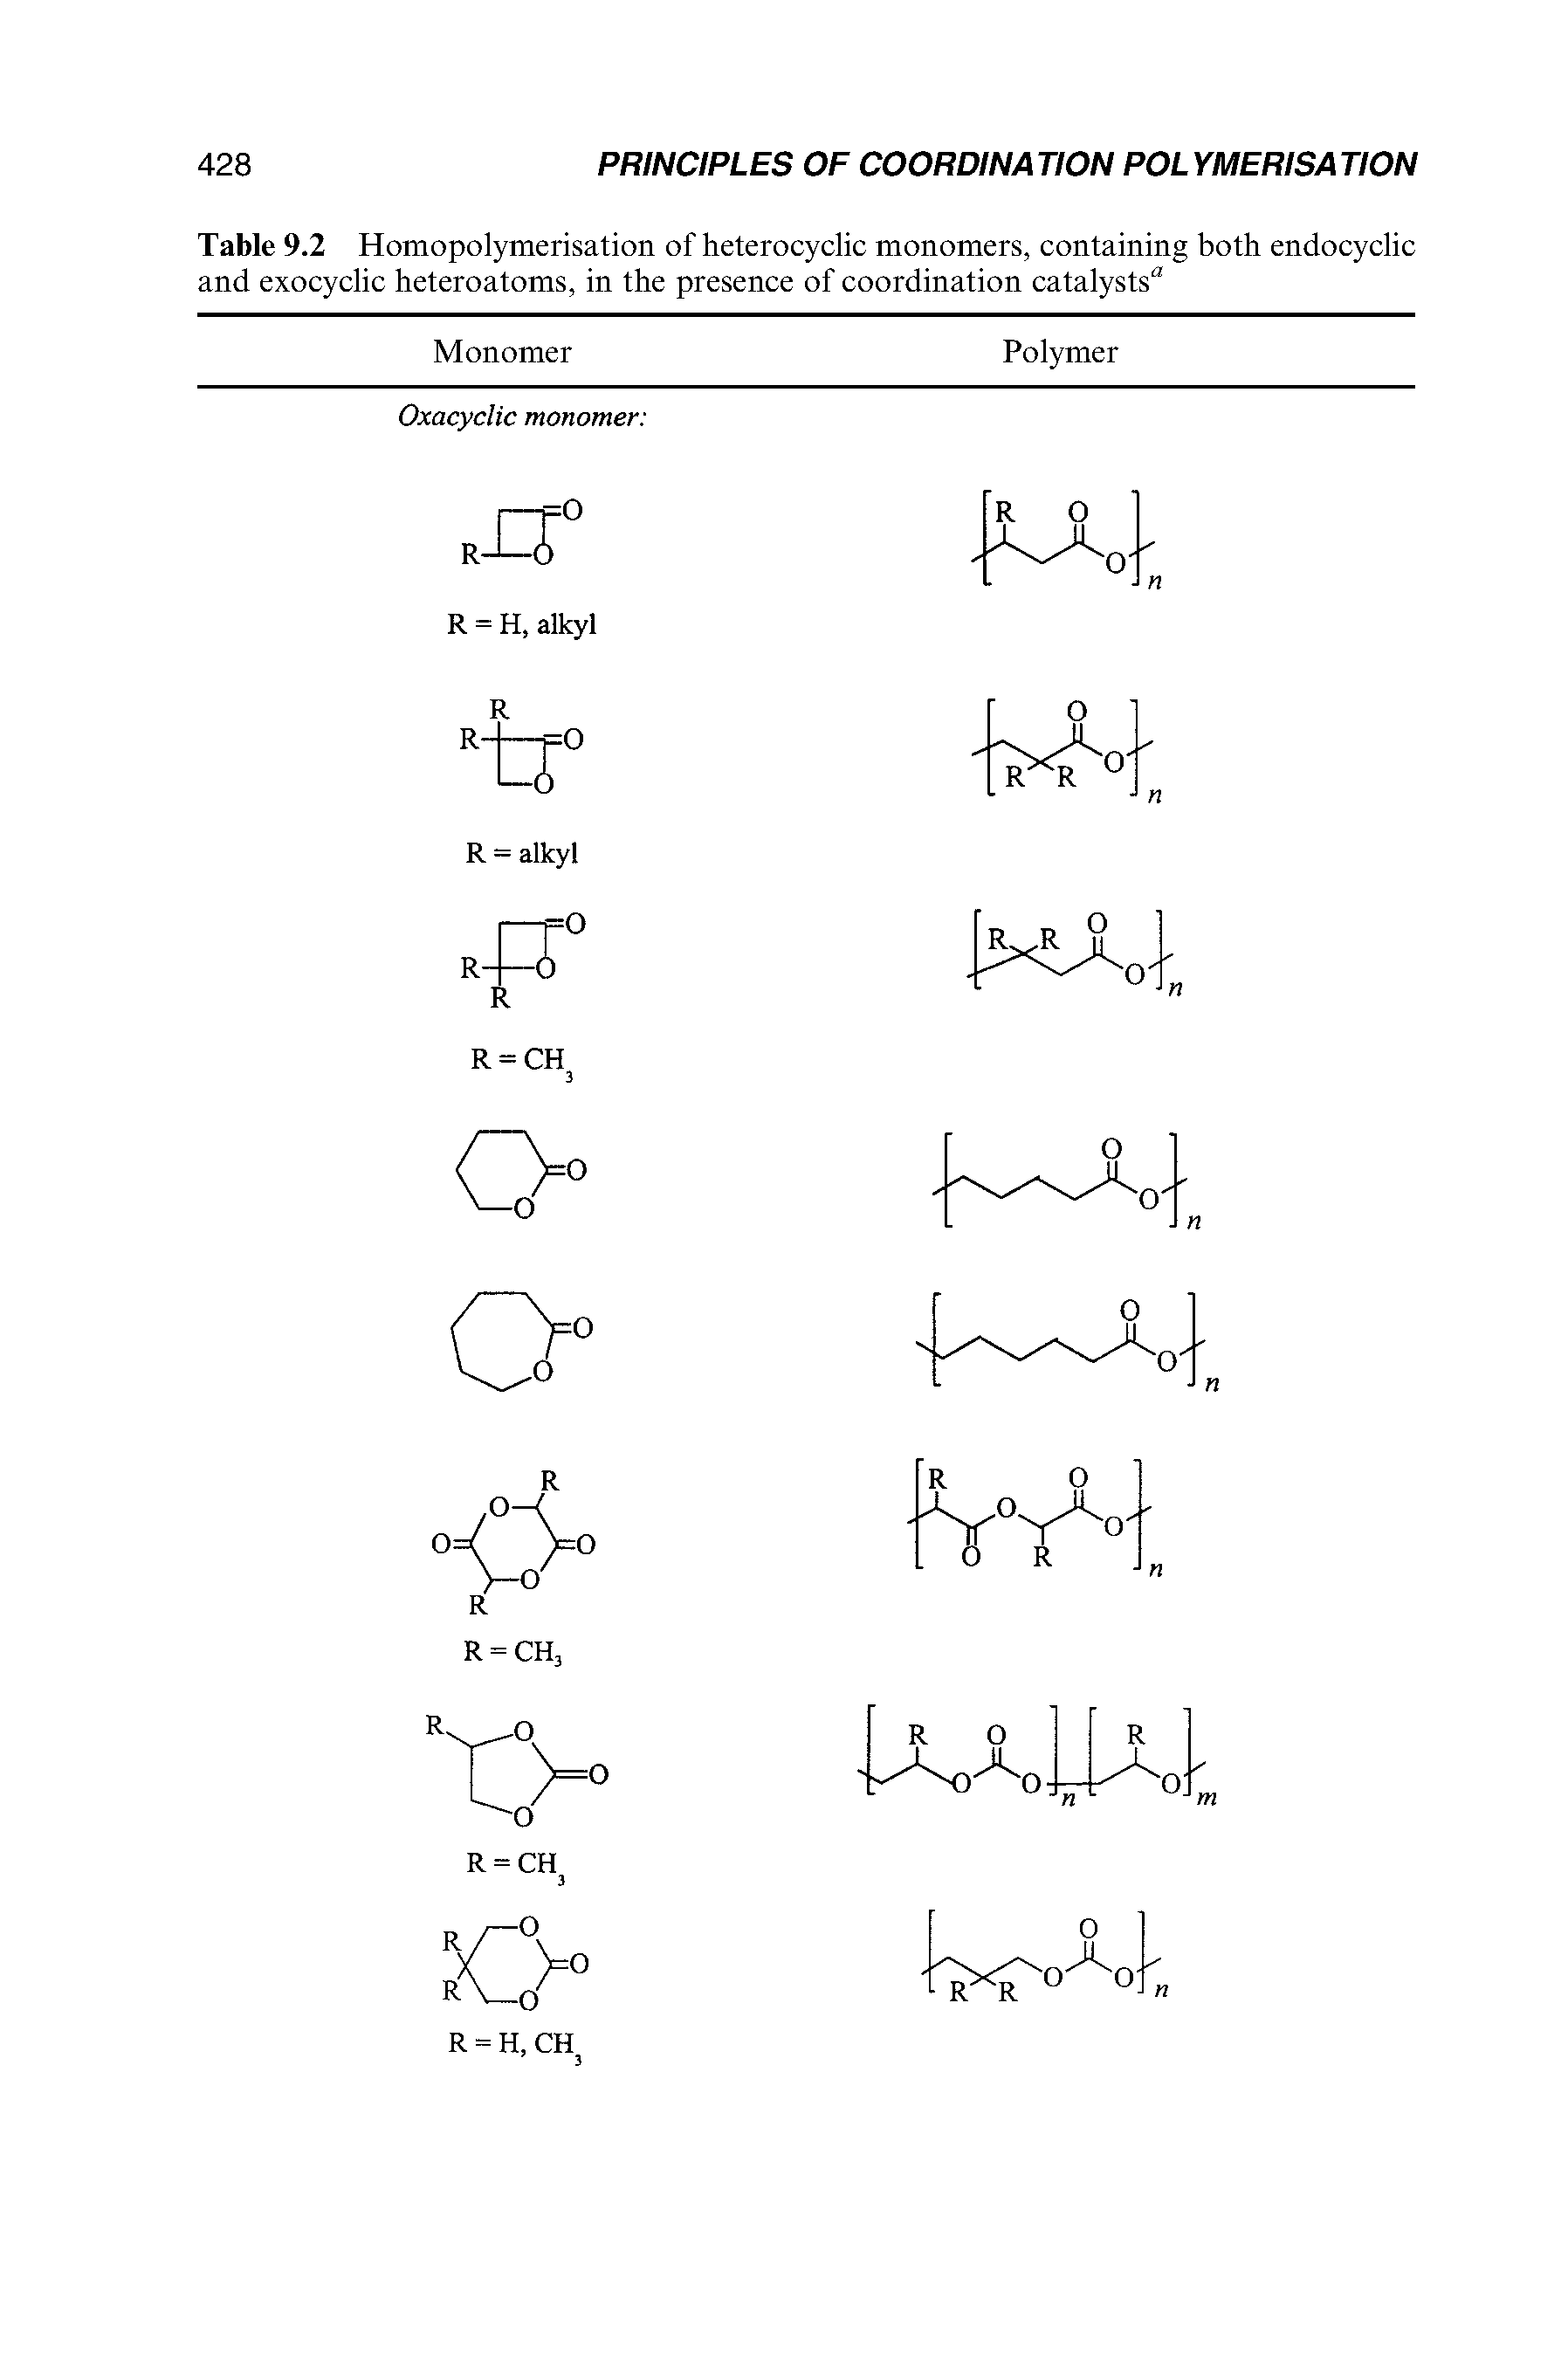 Table 9.2 Homopolymerisation of heterocyclic monomers, containing both endocyclic and exocyclic heteroatoms, in the presence of coordination catalysts 2...